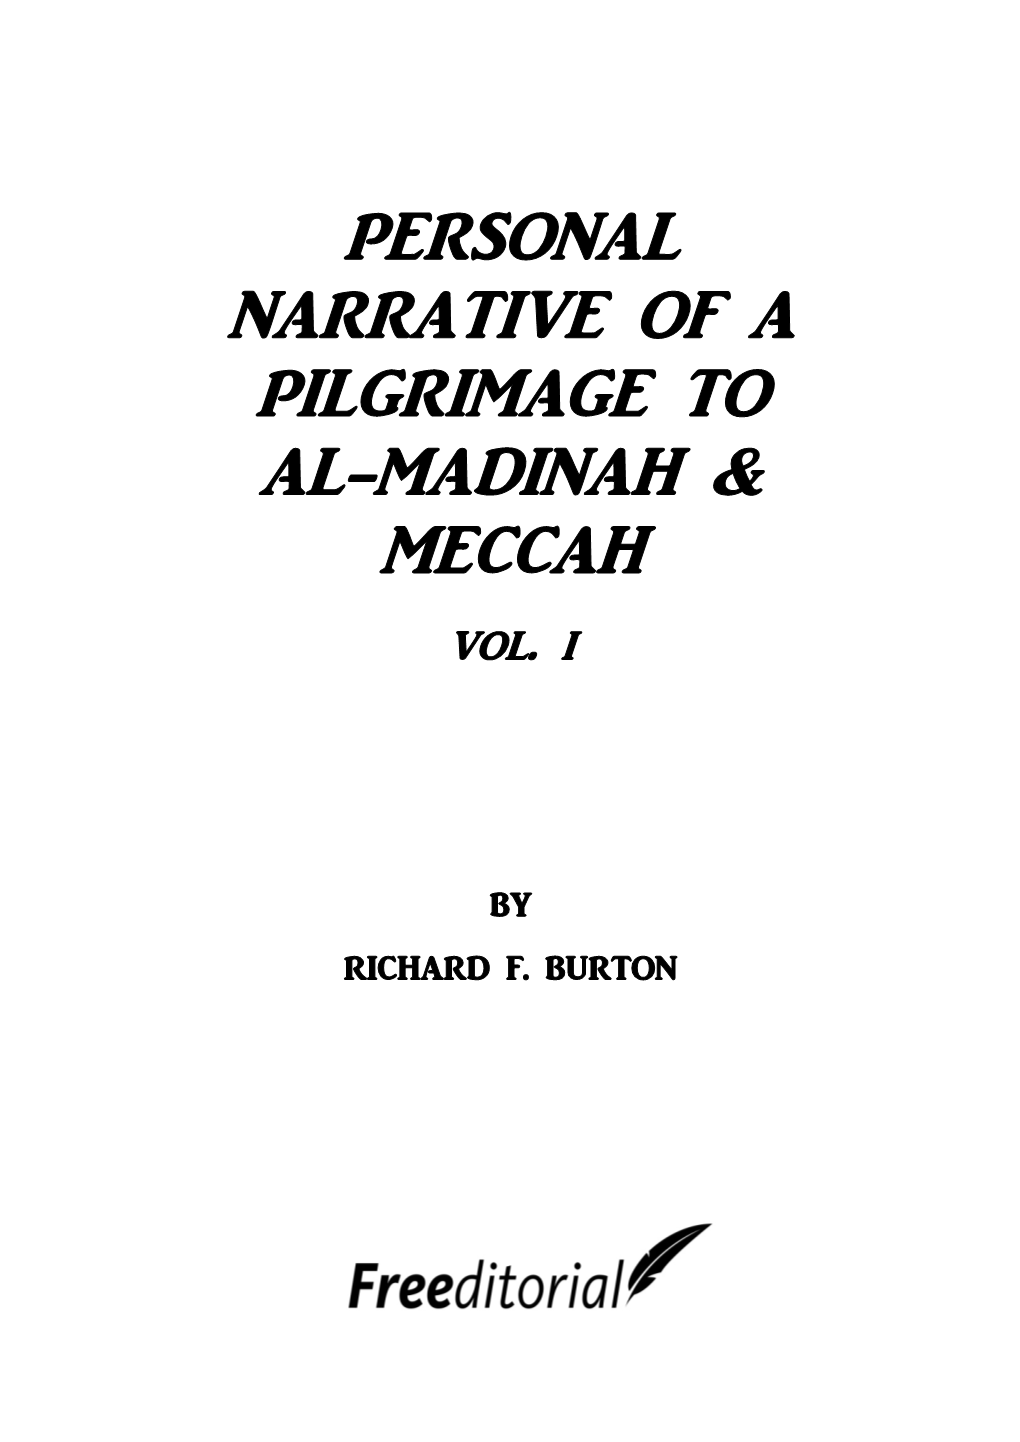 PERSONAL NARRATIVE of a PILGRIMAGE to AL-MADINAH & MECCAH Vol